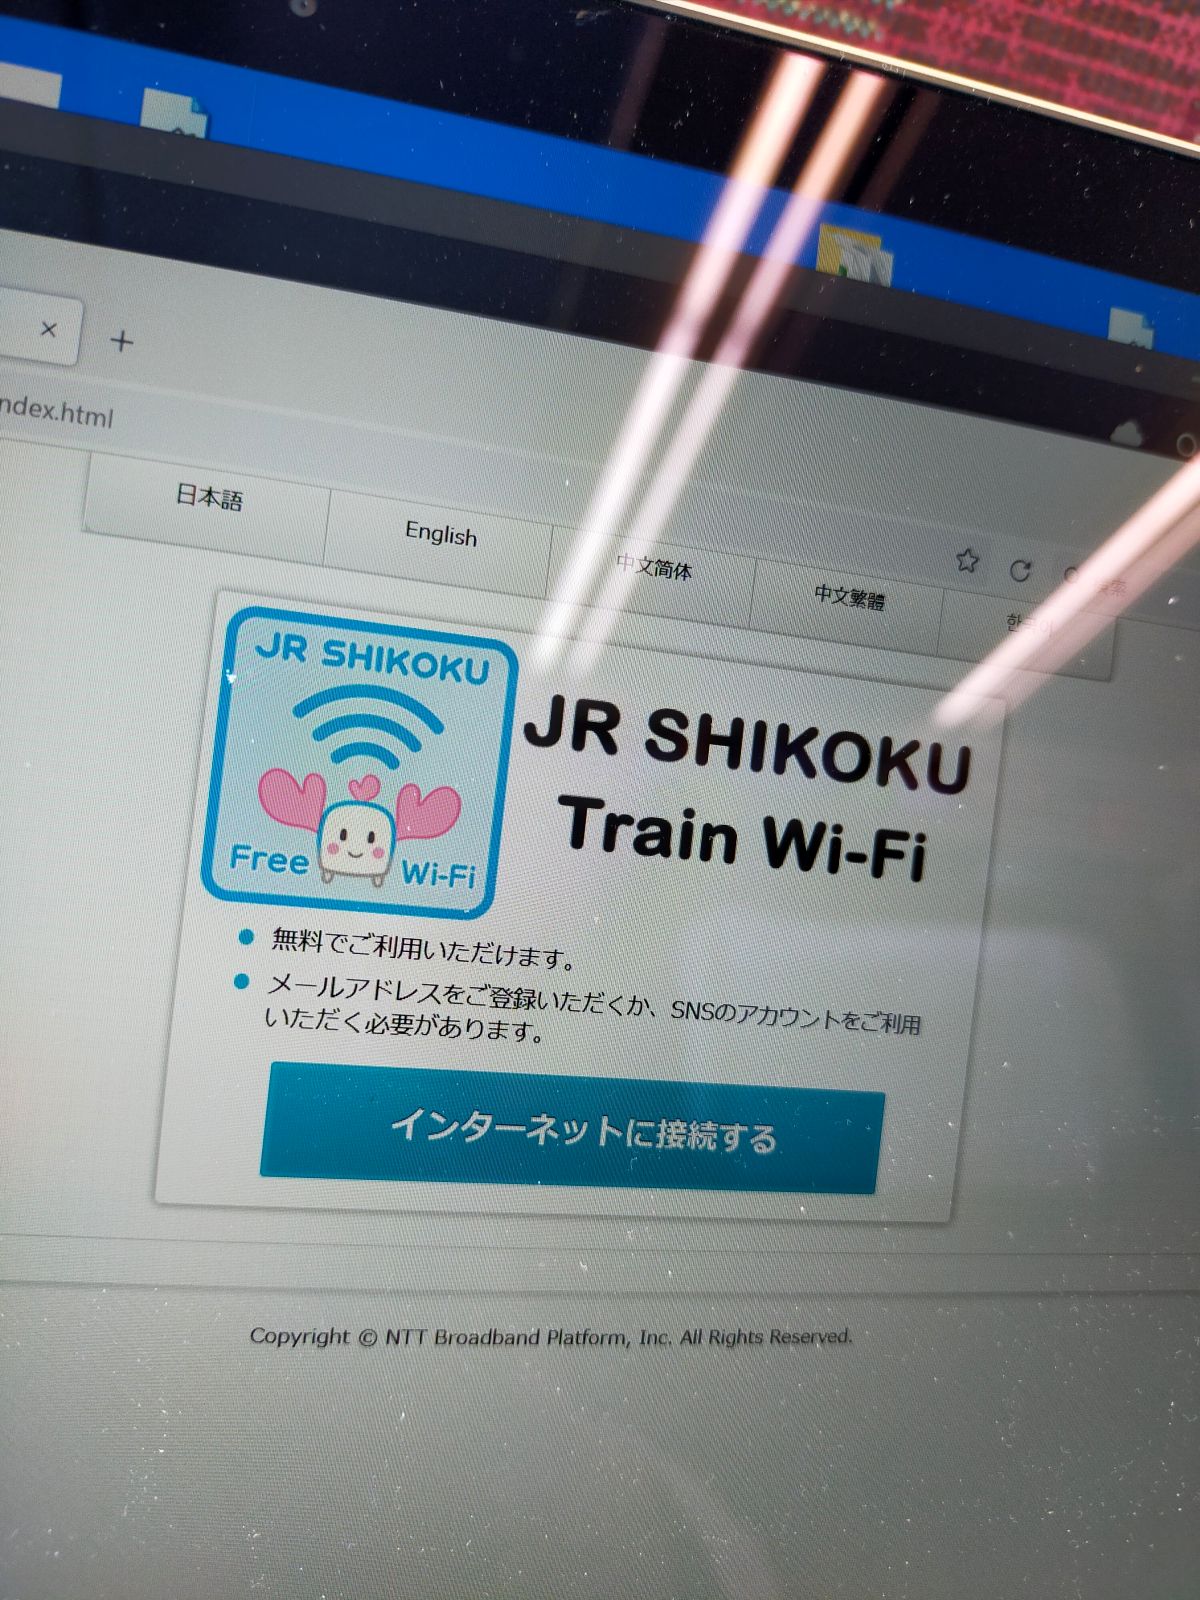 JR SHIKOKU Train Wi-Fi